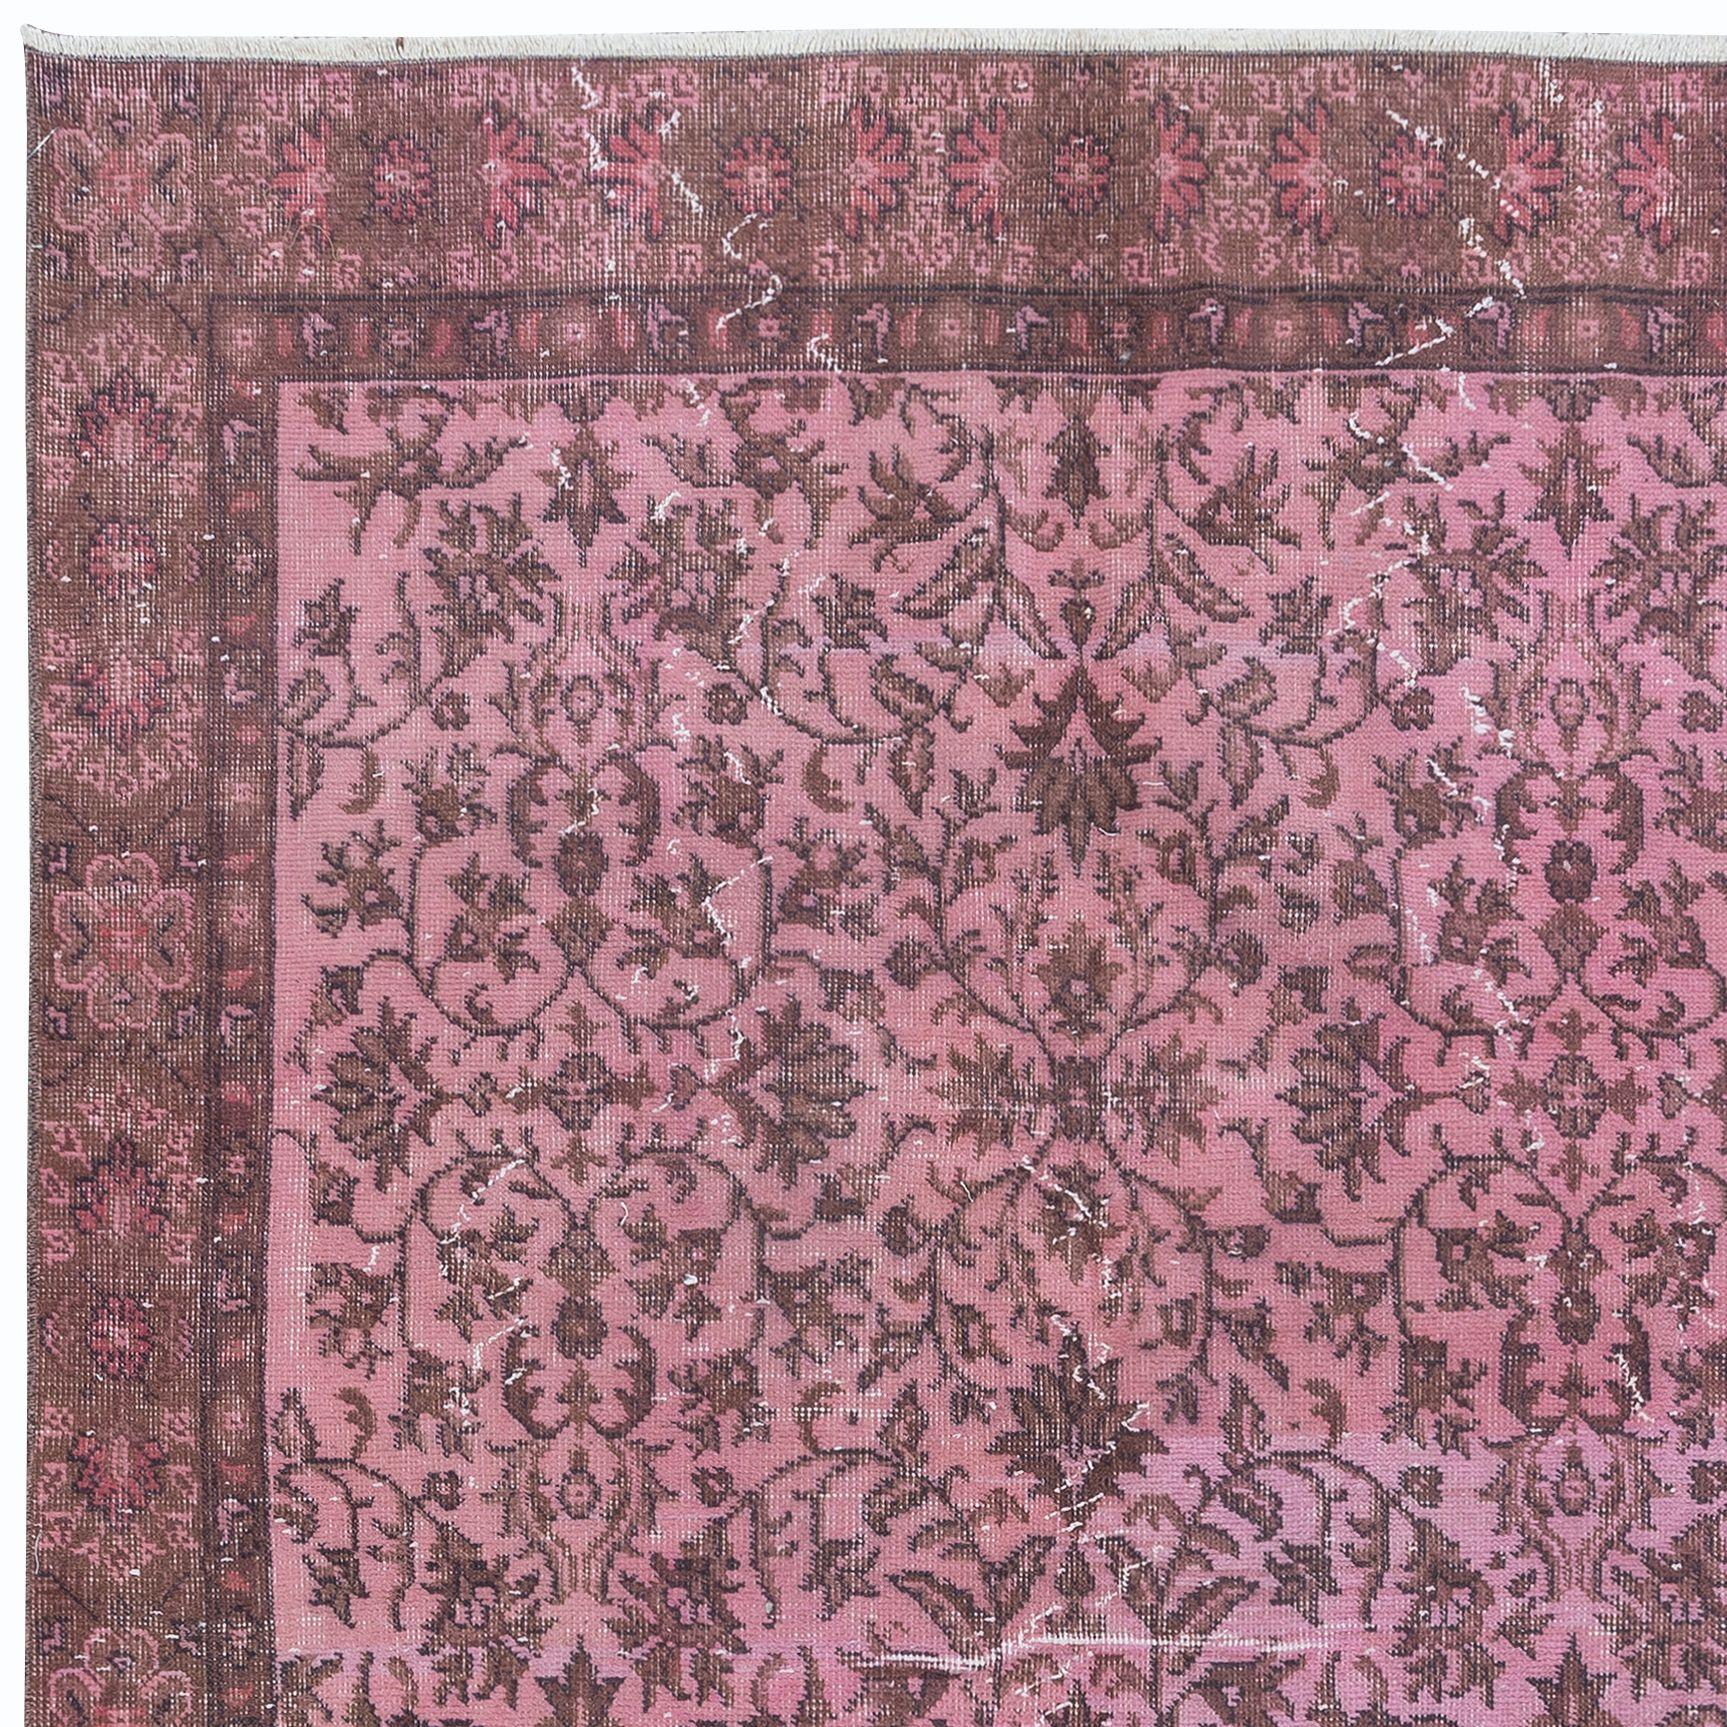 Hand-Woven 5x8.6 Ft Rose Pink Modern Turkish Area Rug. Handmade Flower Design Carpet For Sale